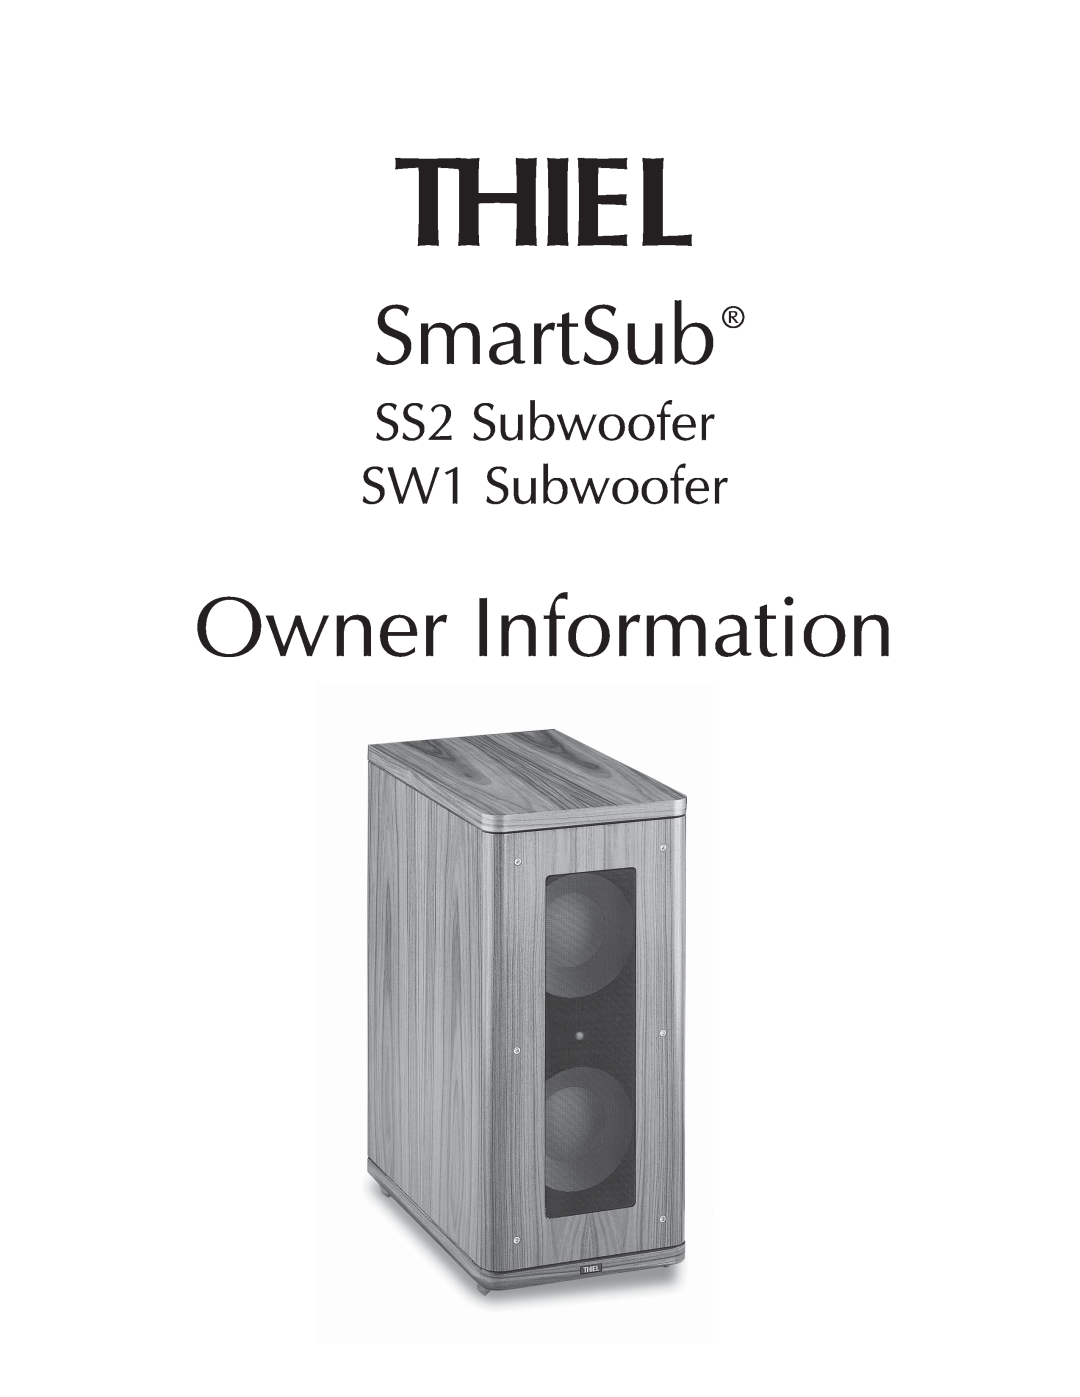 Thiel Audio Products manual Thiel, SmartSub, Owner Information, SS2 Subwoofer SW1 Subwoofer 